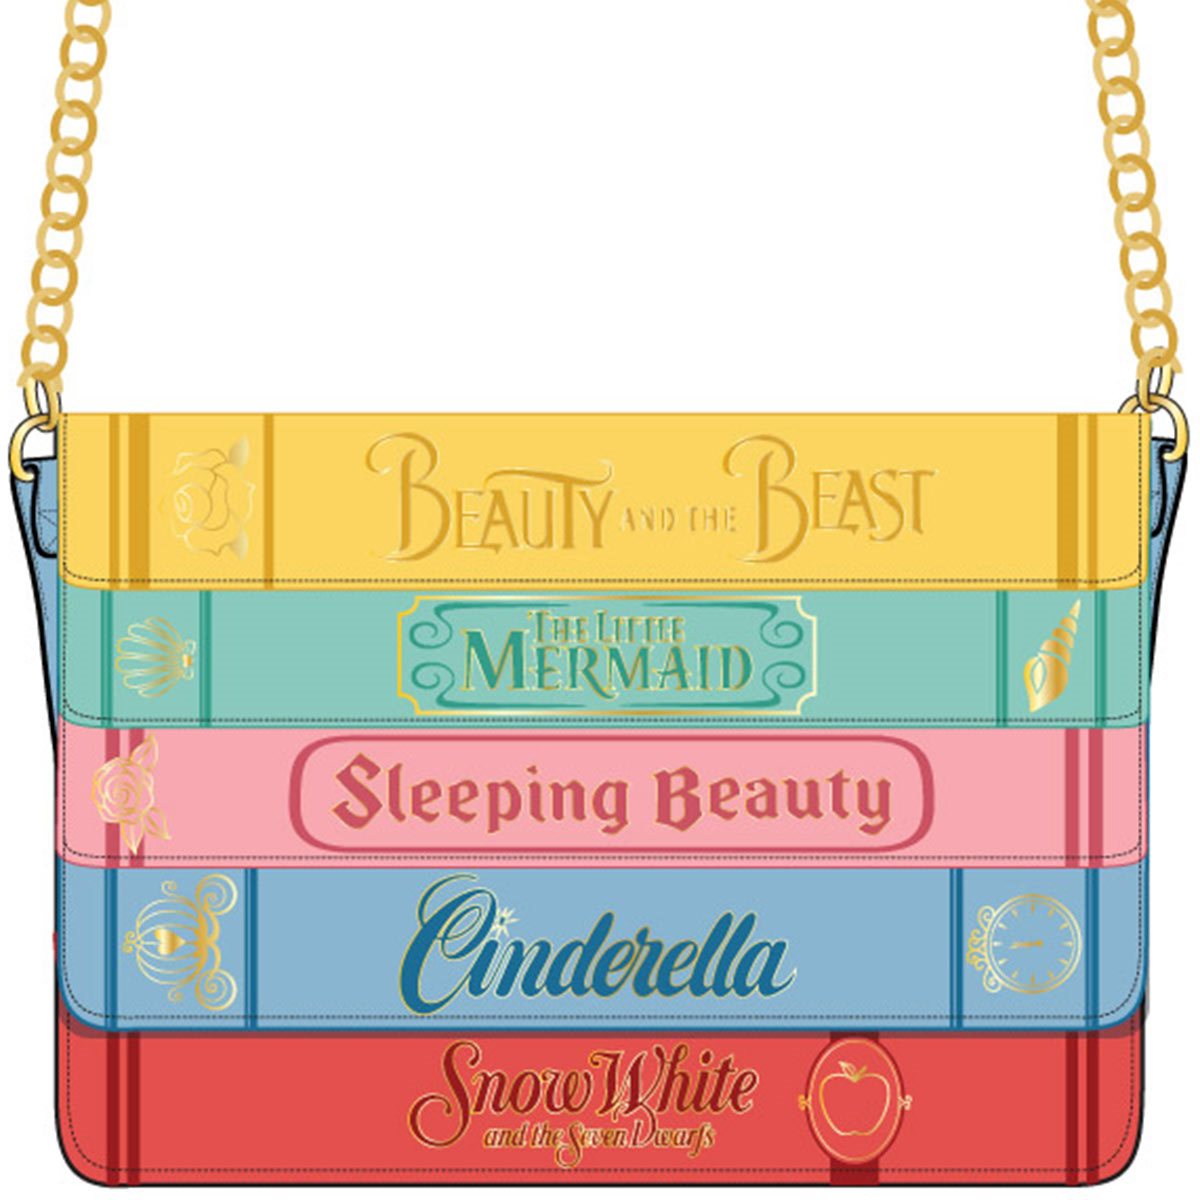 Loungefly Disney Sleeping Beauty Princess Film Scenes Crossbody Bag